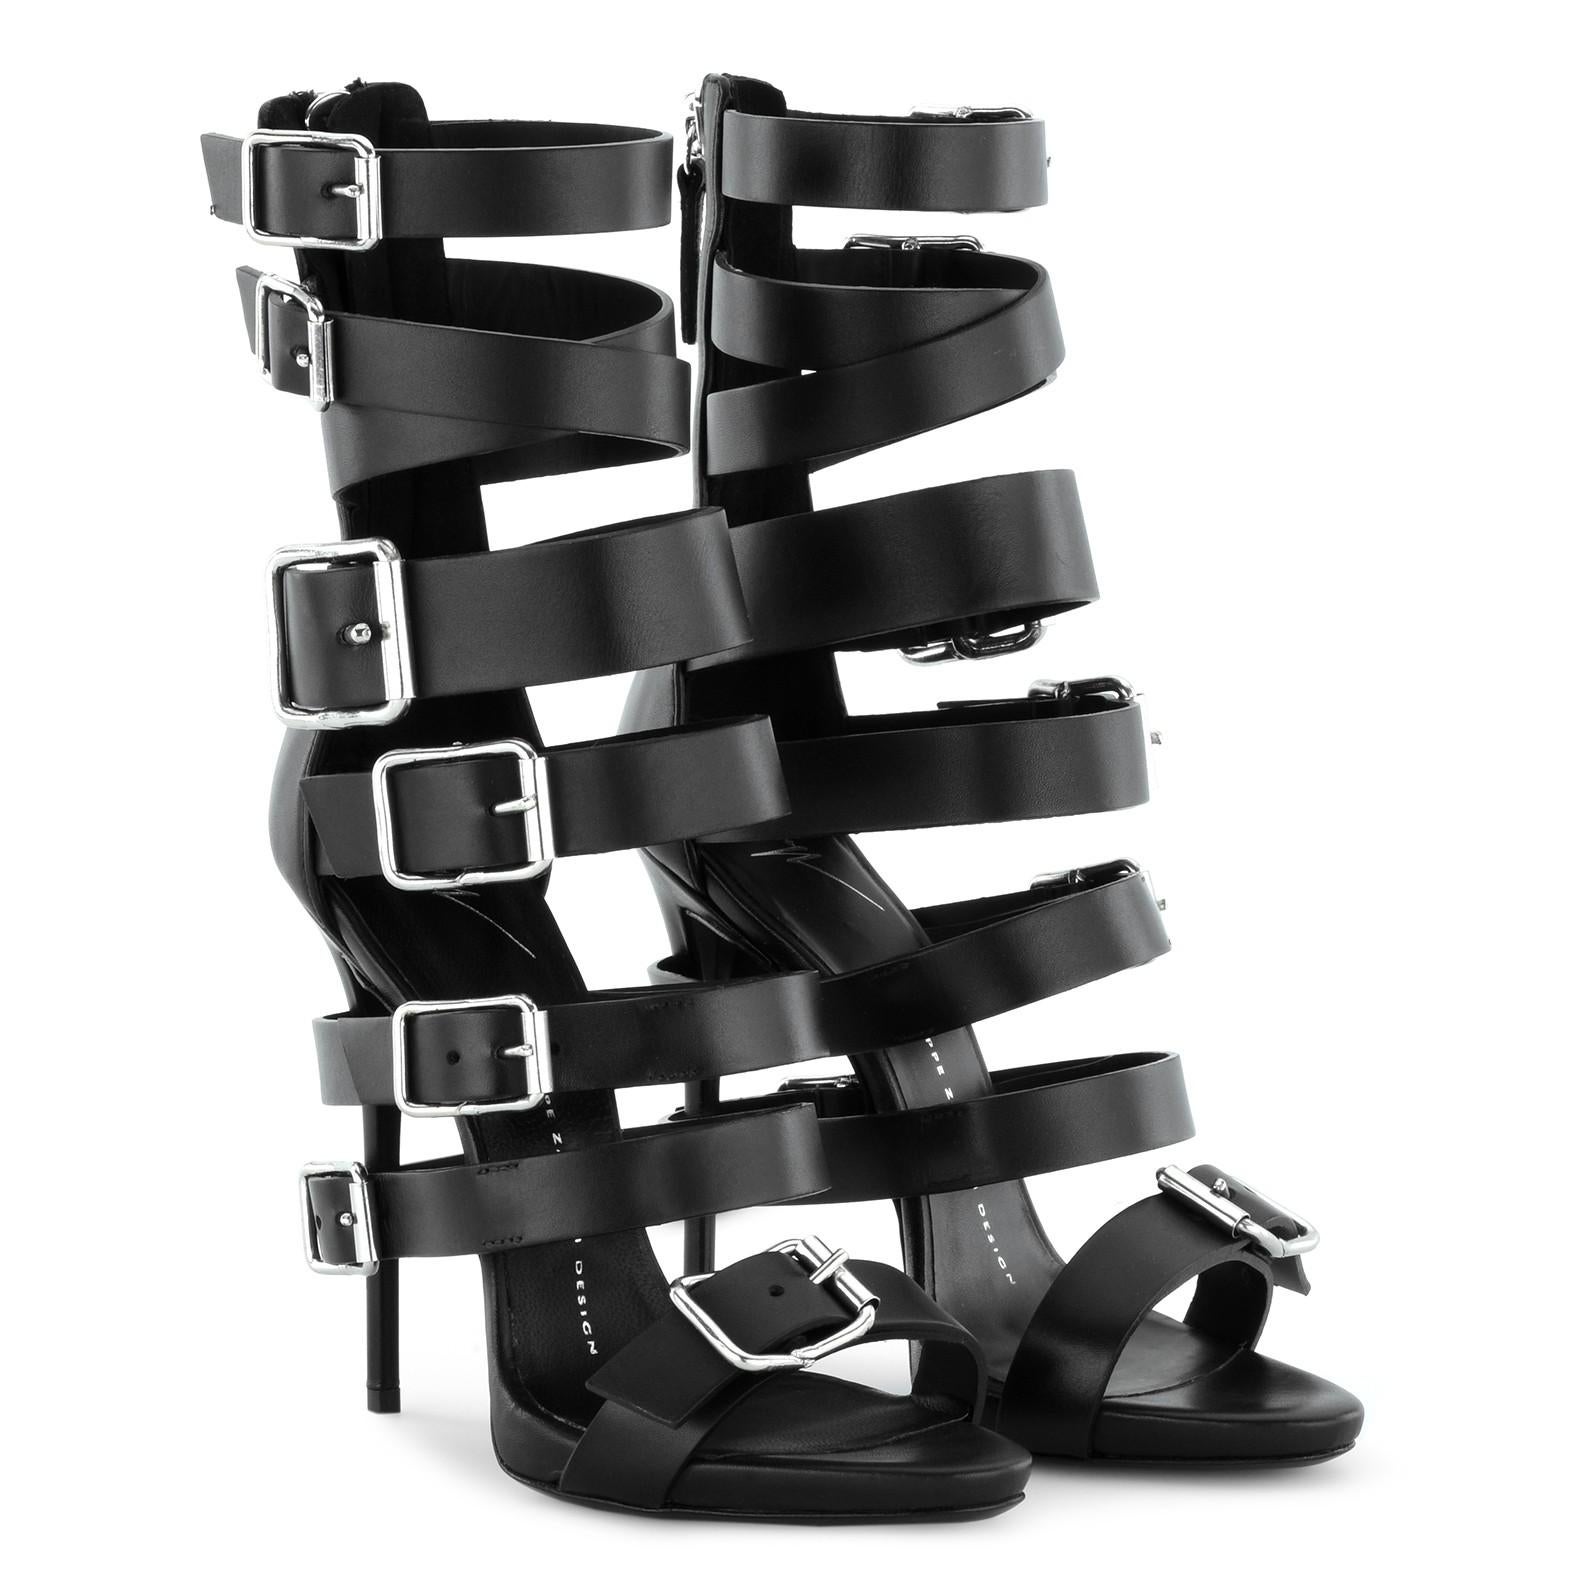 Women's Giuseppe Zanotti NEW Black Leather Silver Buckle Evening Sandals Heels in Box II